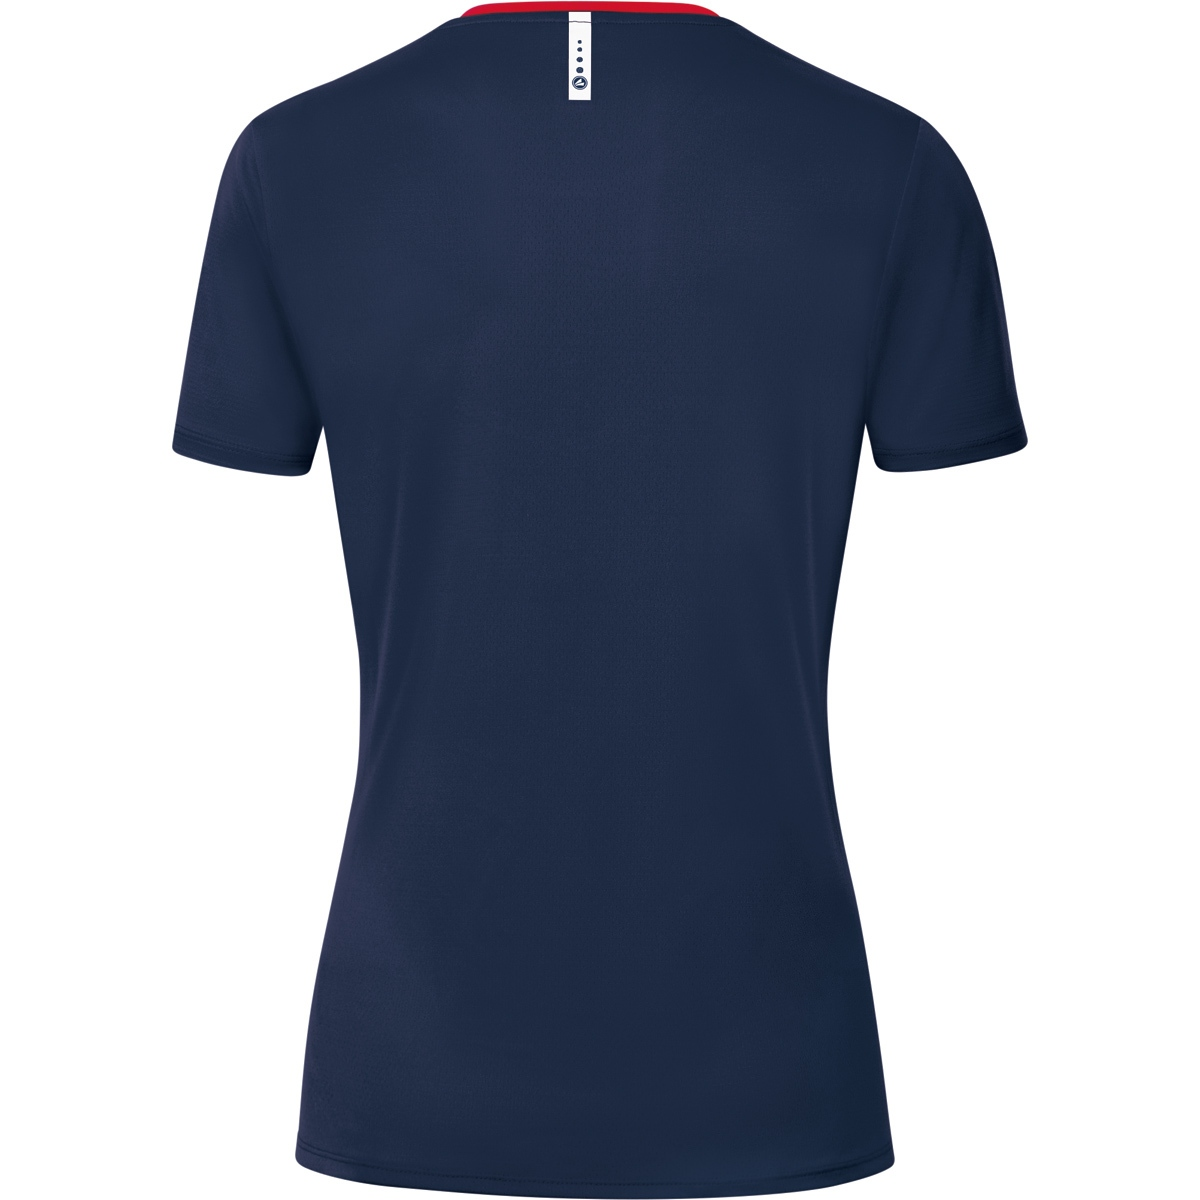 T-Shirt Champ marine/chili Gr. 40, 6120 2.0 rot, JAKO Damen,